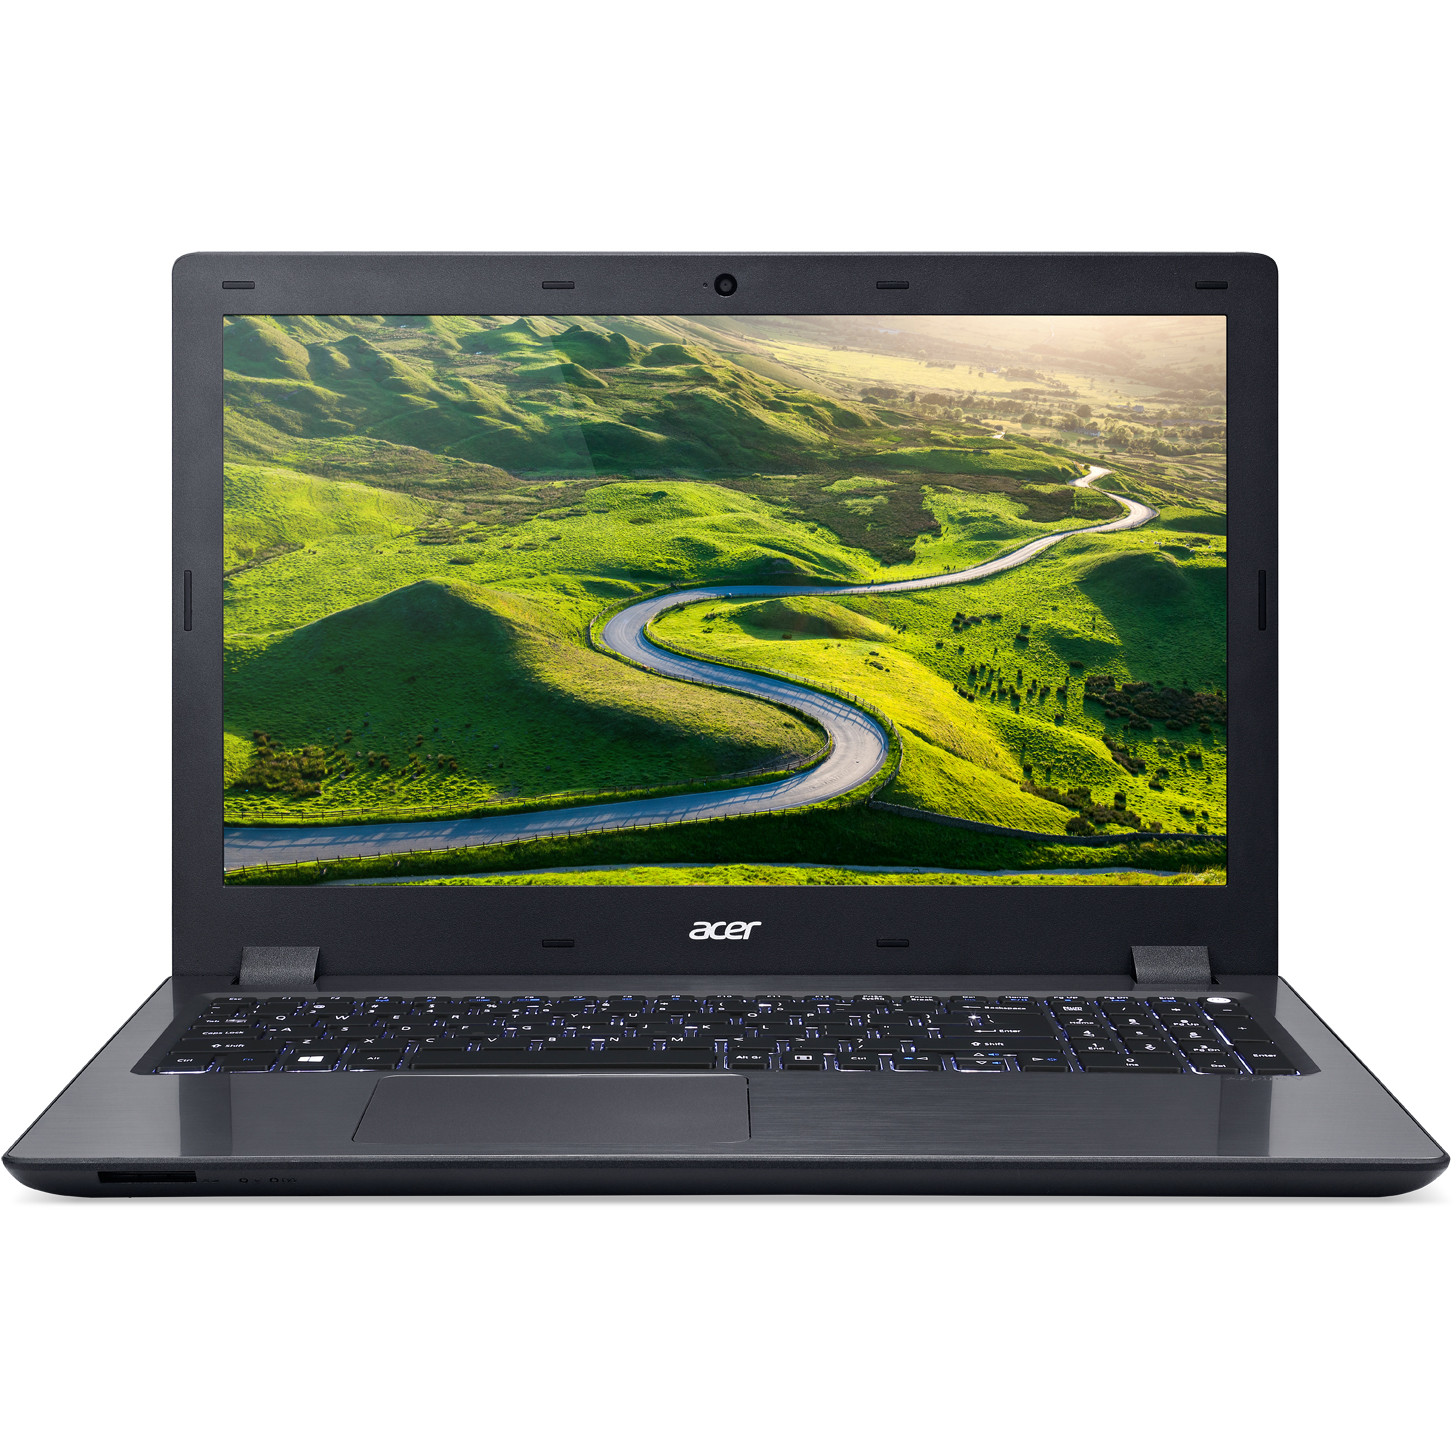  Laptop Acer Aspire V5-591G, Intel Core i5-6300HQ, 4GB DDR4, HDD 500GB + SSD 128GB, nVidia GeForce GTX 950M 2GB, Linux 